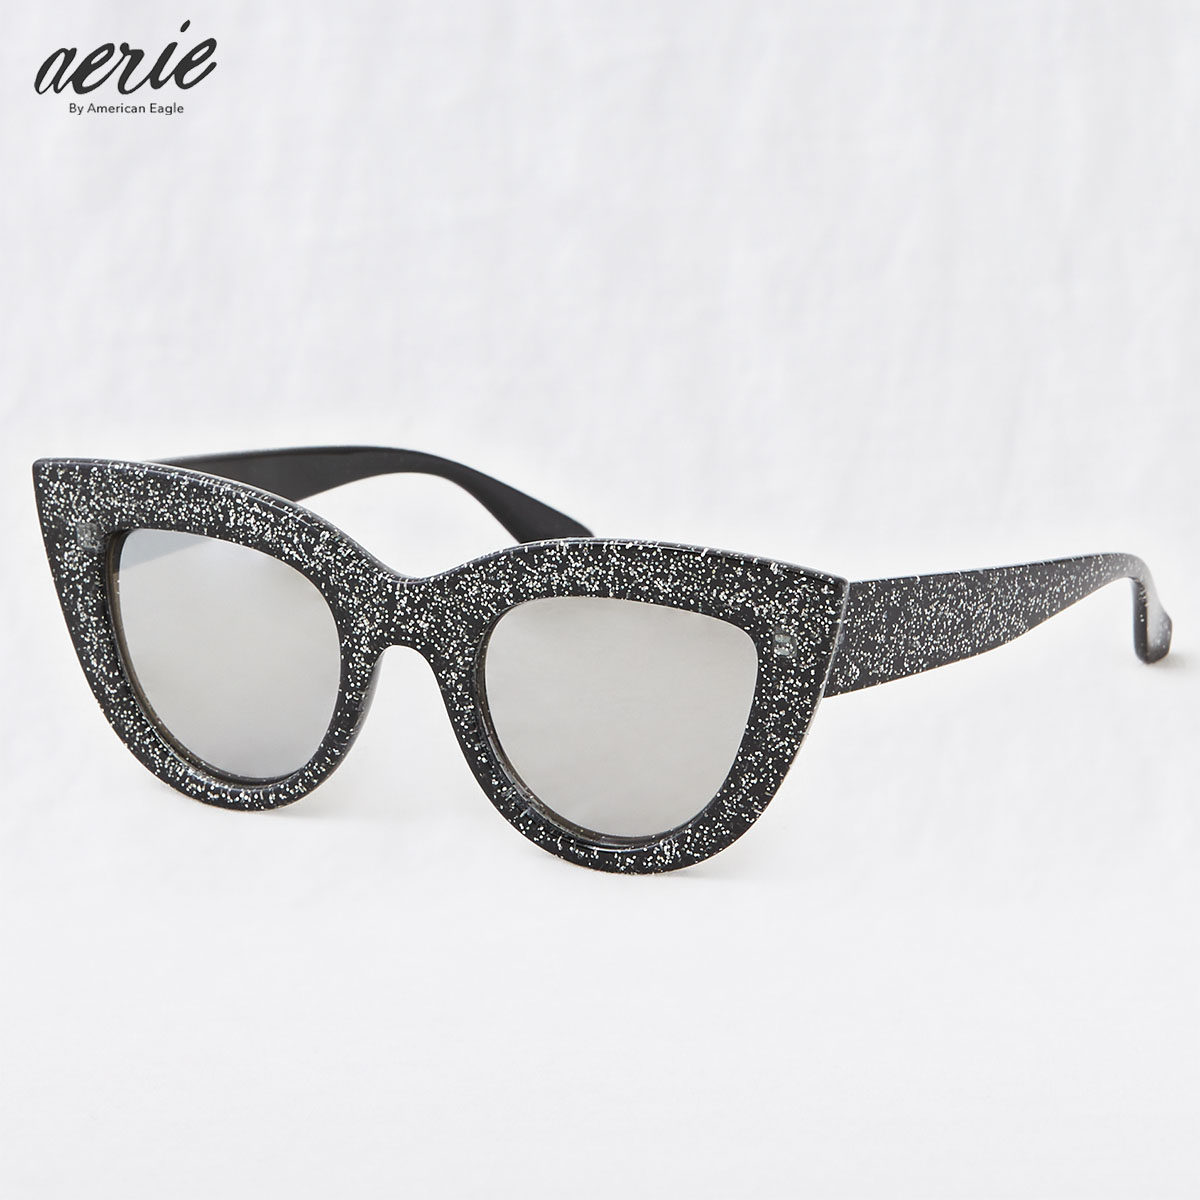 Aerie Meow Sunnies แว่นตา ผู้หญิง แฟชั่น(072-4567-073)